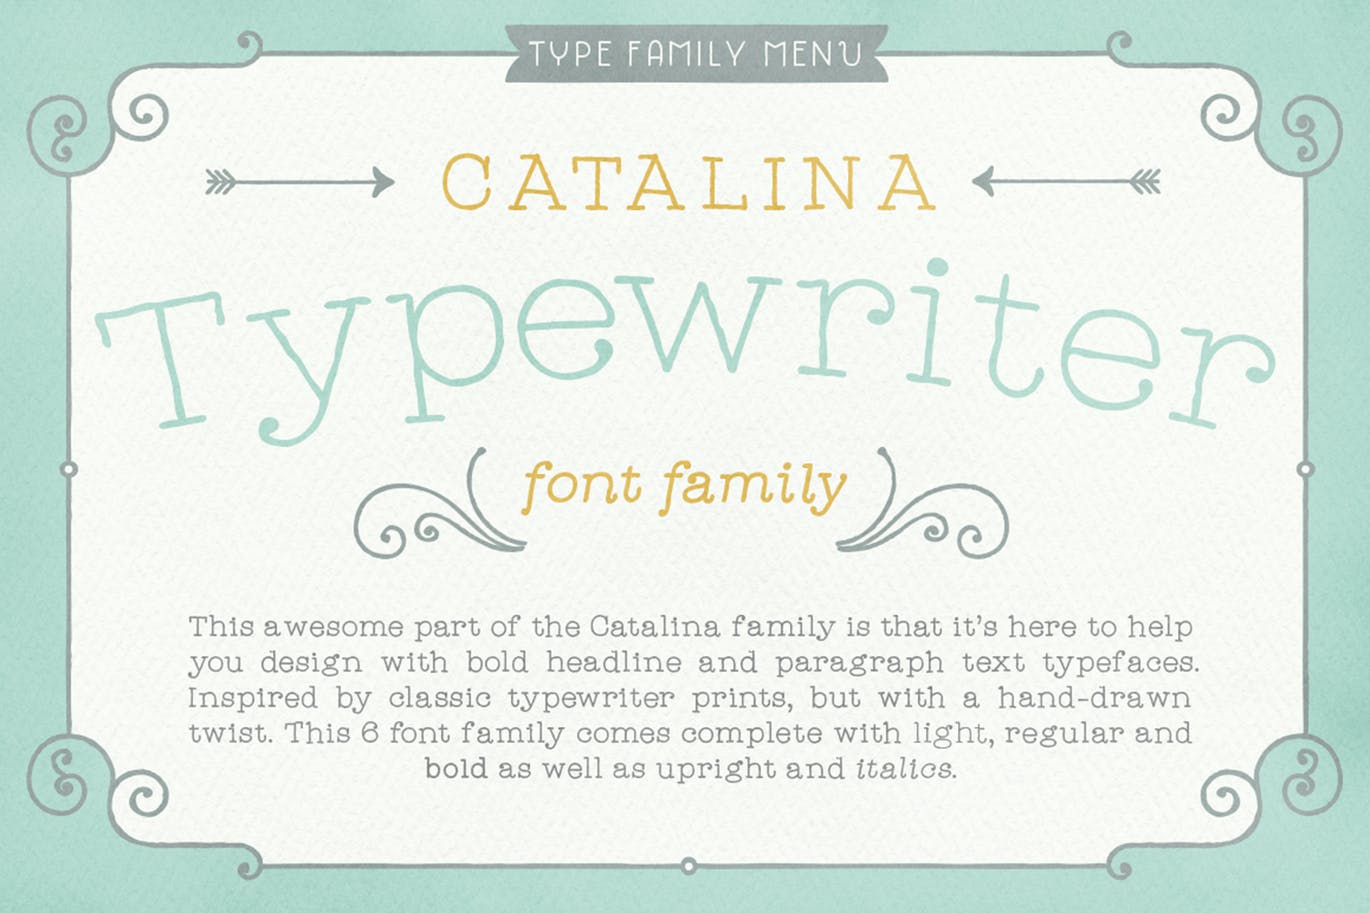 A typewriter font family